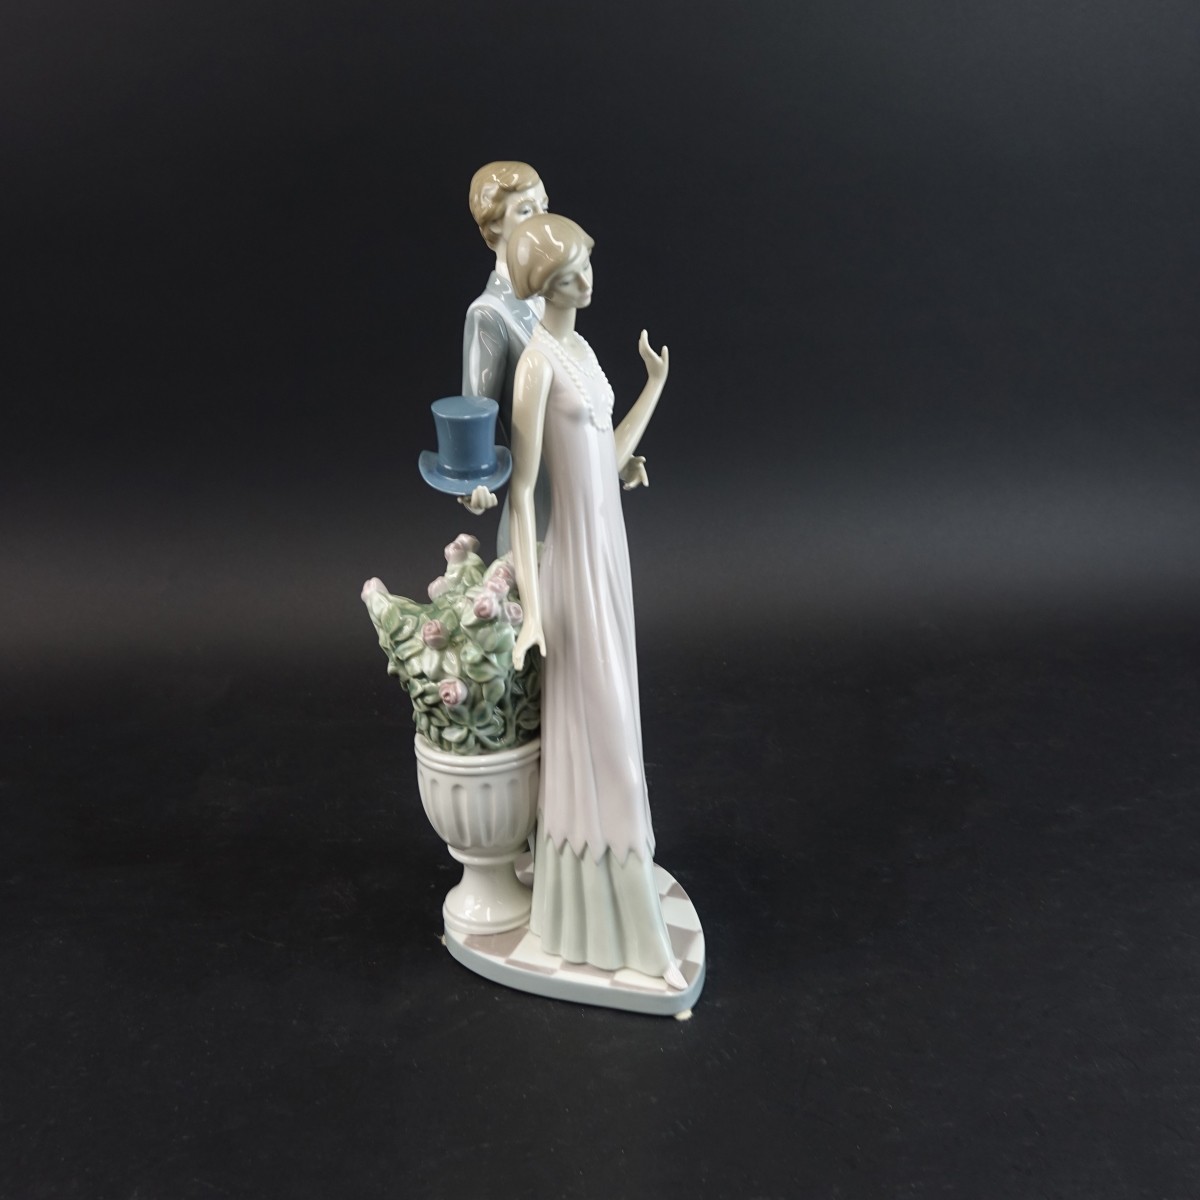 Lladro "High Society" Porcelain Figurine